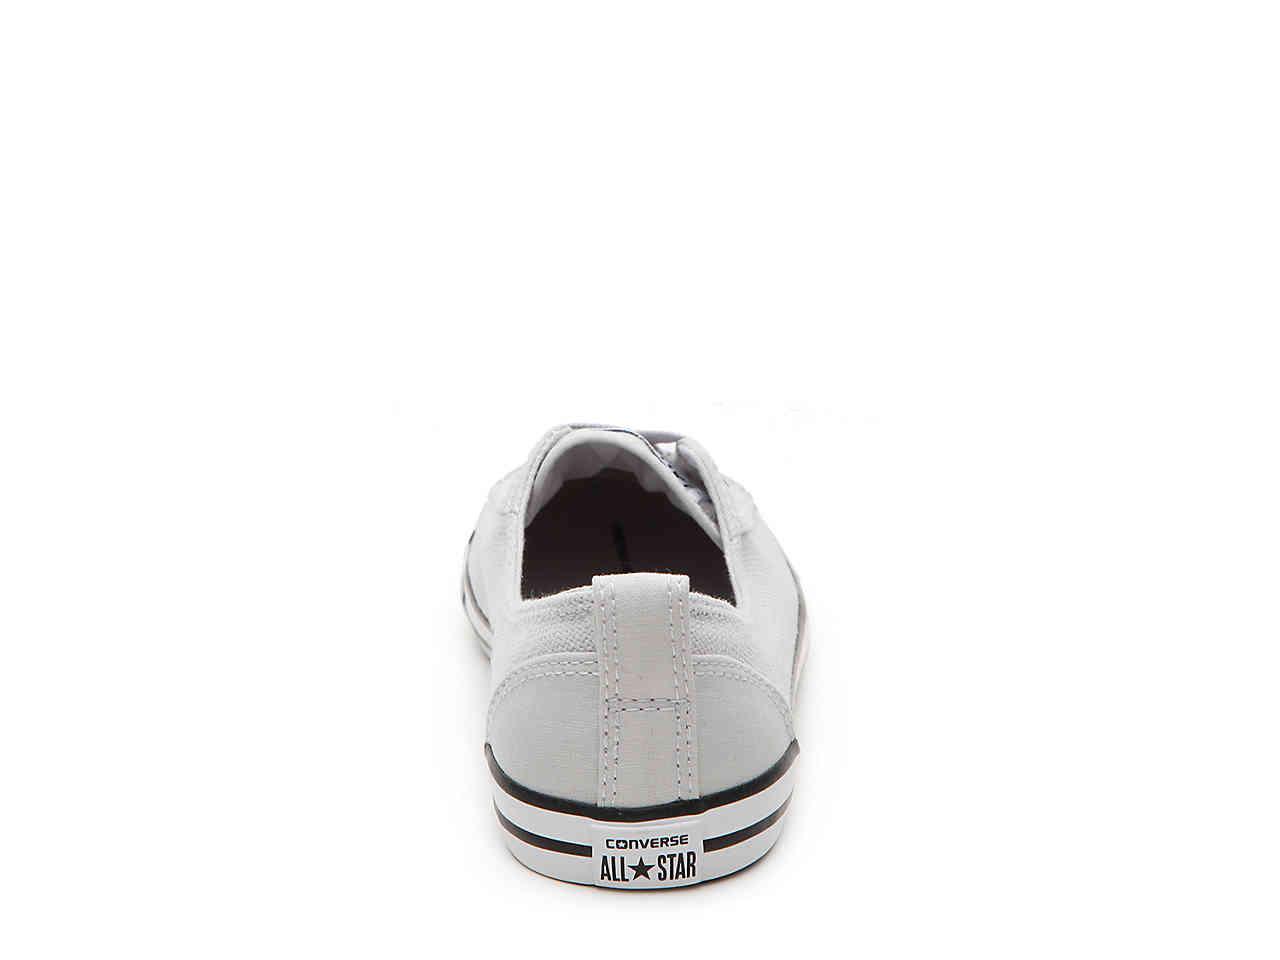 Converse Chuck Taylor All Dainty Ballet Slip-on Sneaker in Gray